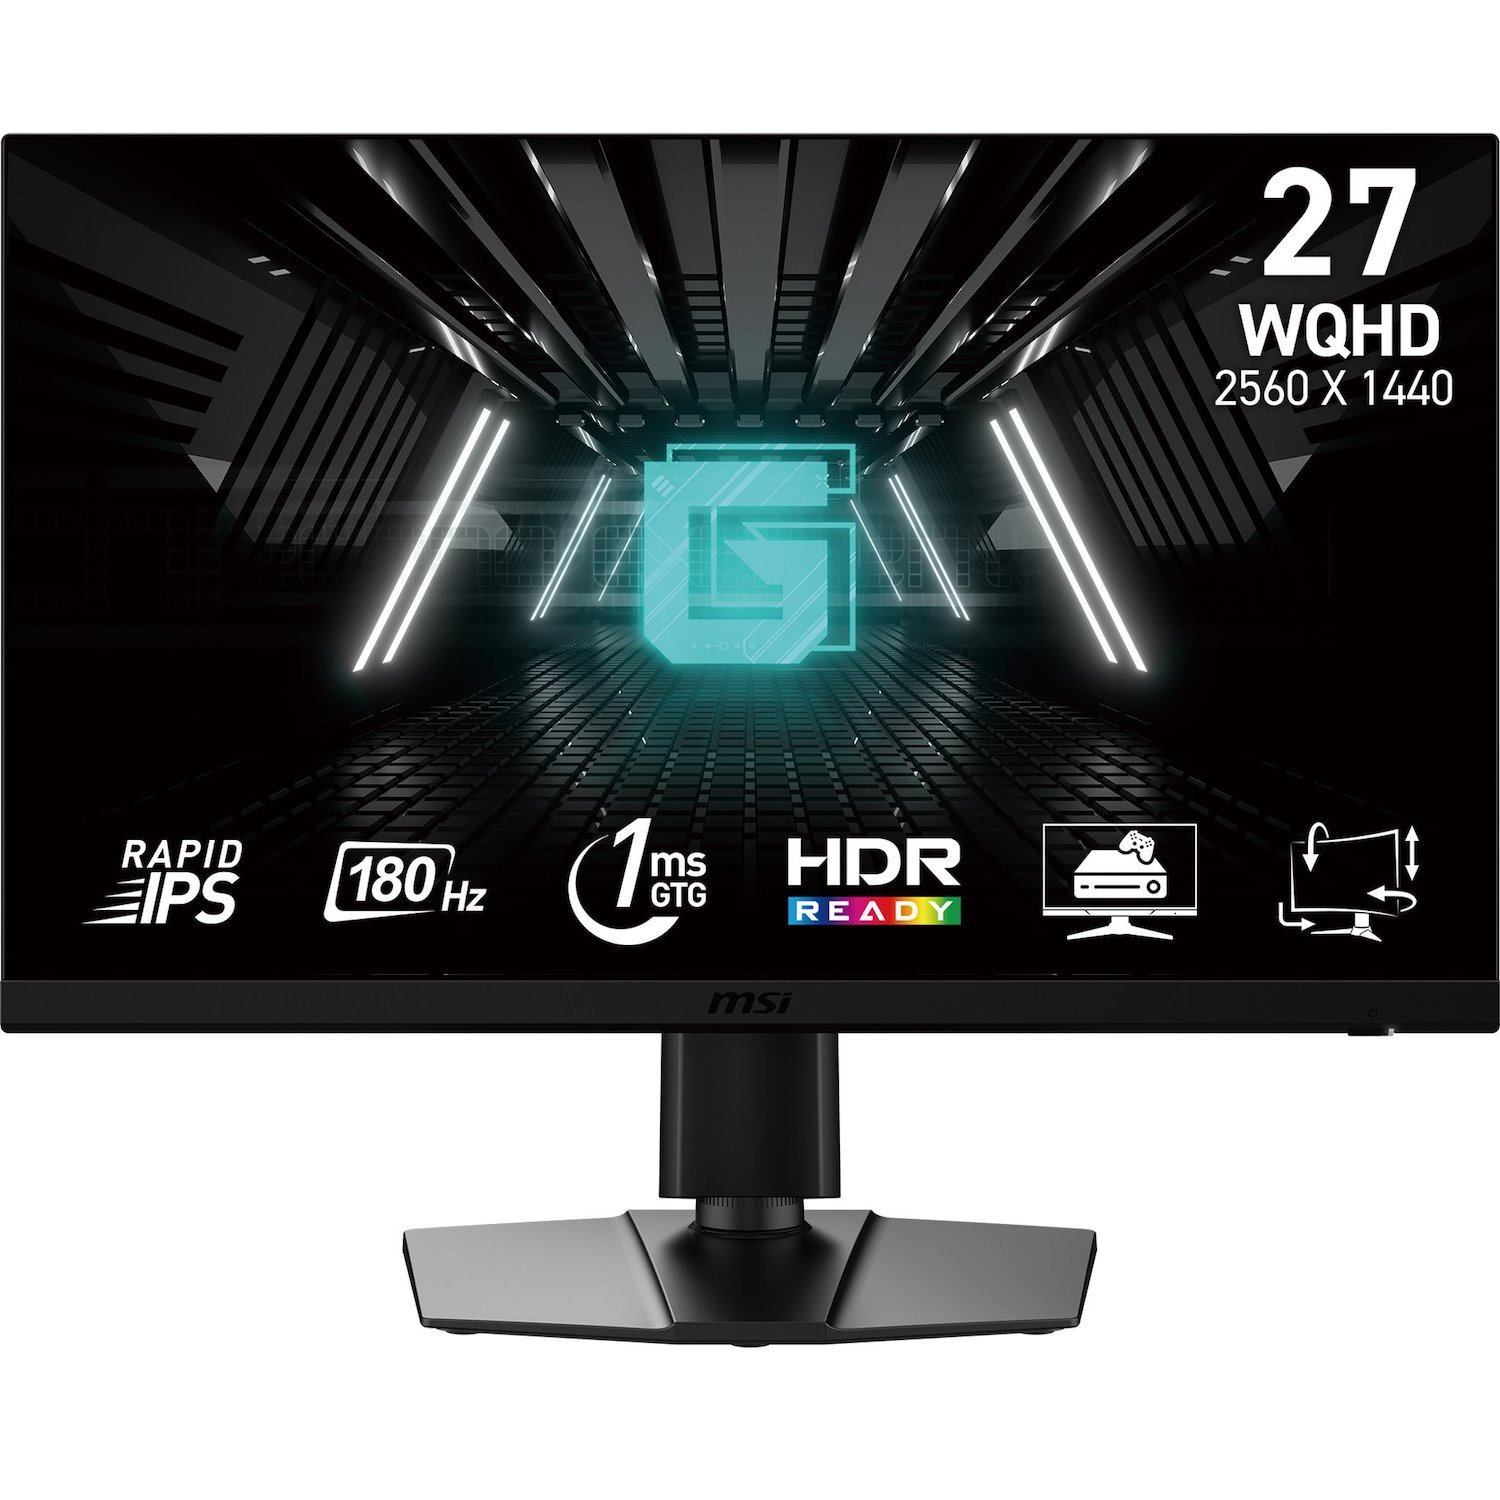 MSI G272QPF E2 27" Class WQHD Gaming LCD Monitor - 16:9